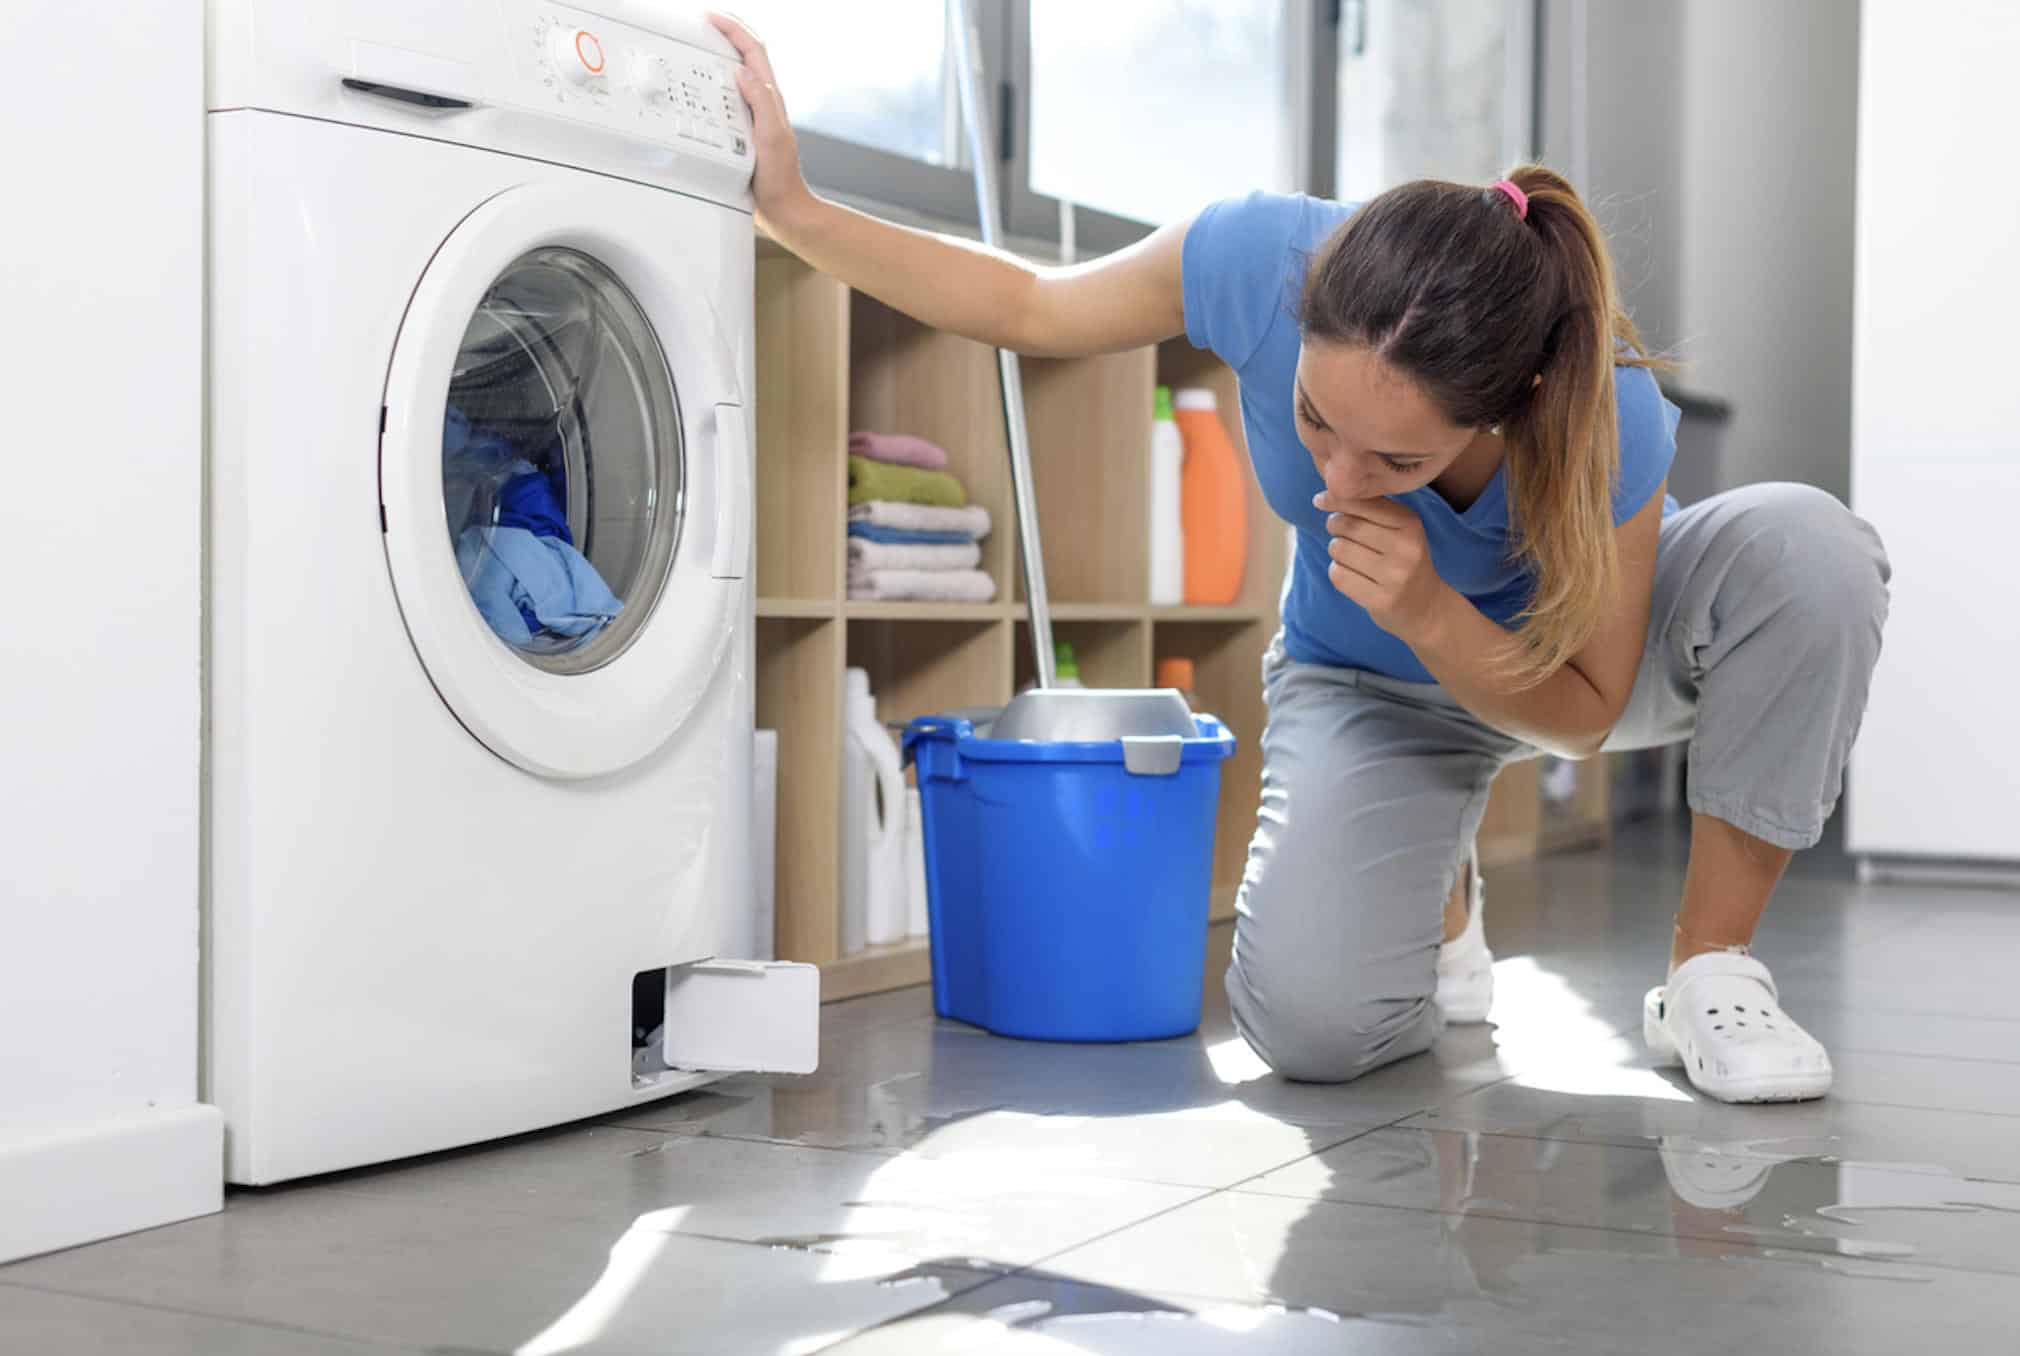 Washing Machine Causes Water Damage In Home